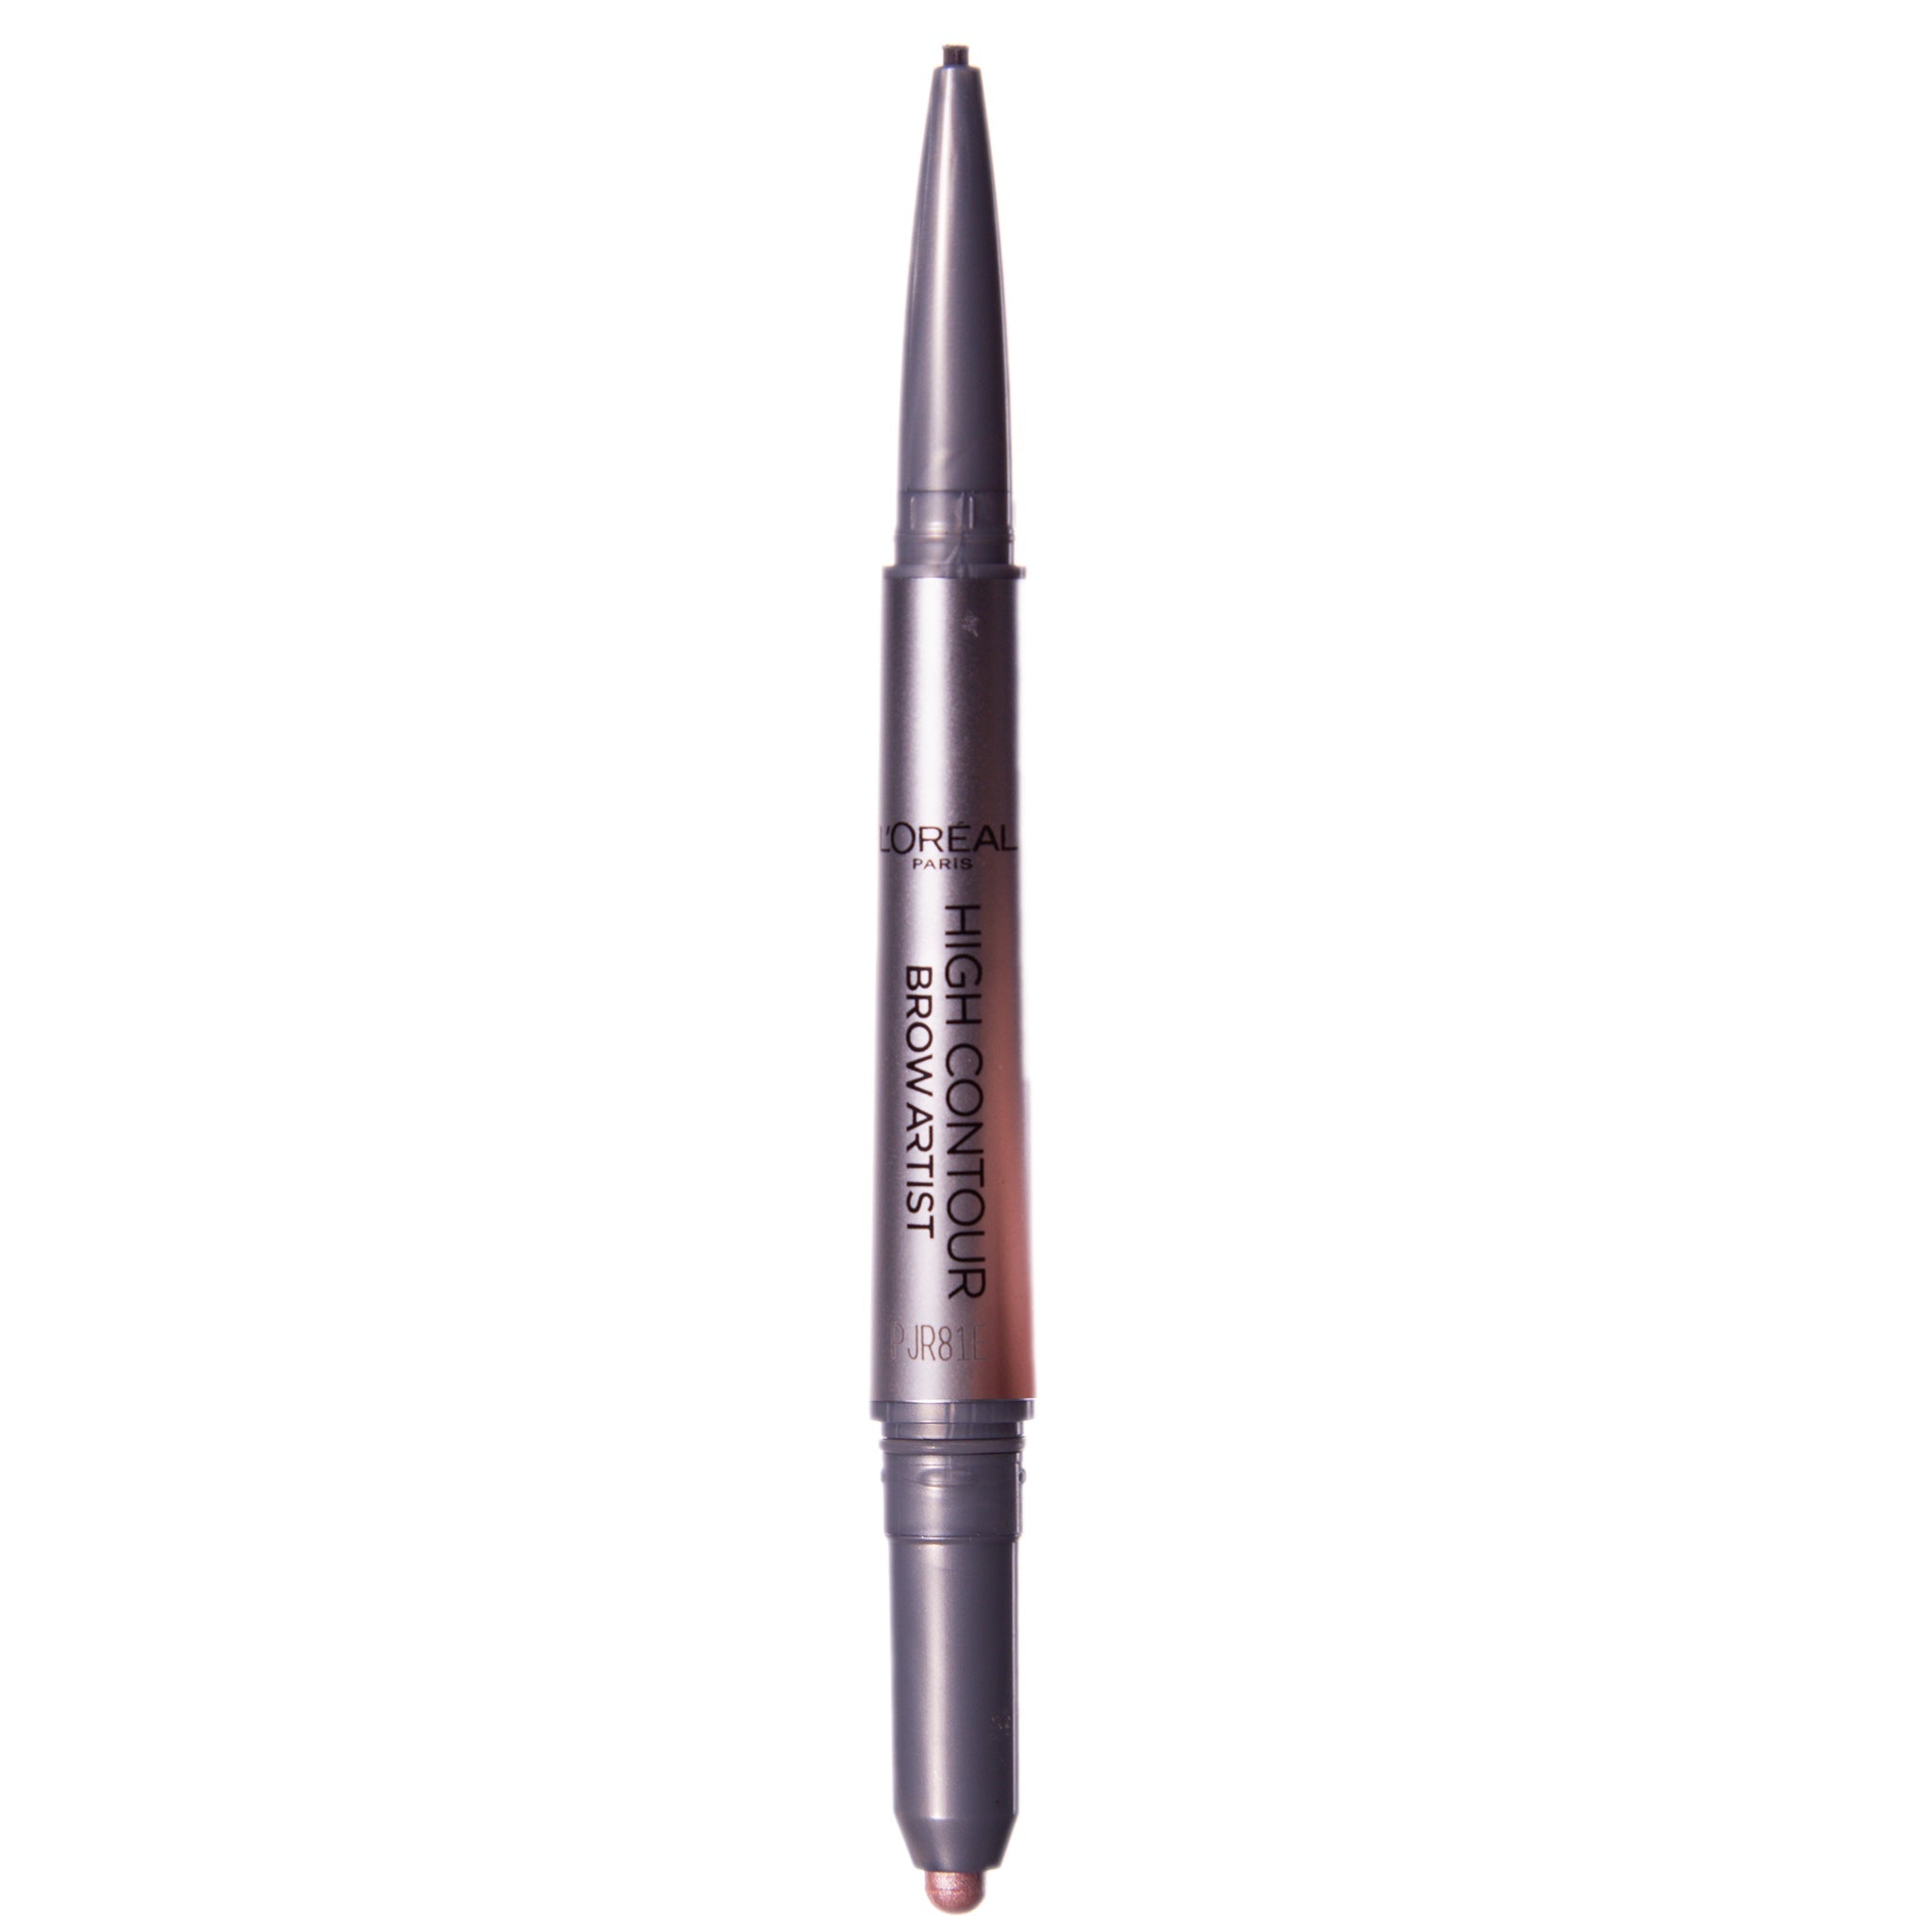 [B-GRADE] L'Oreal Paris High Contour Brow Pencil & Highlighter Duo - 107 Cool Brunette